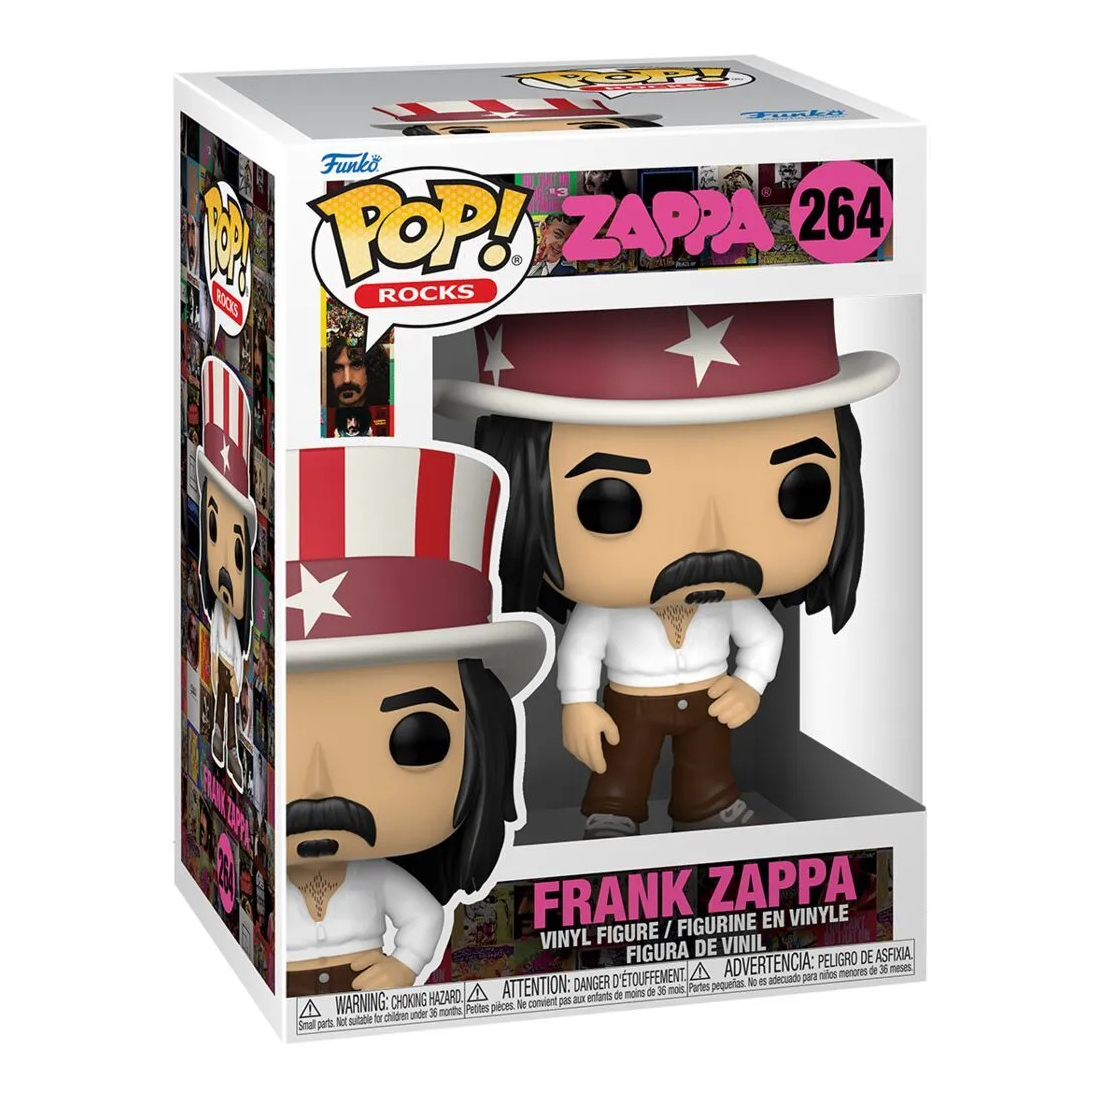 Фигурка Funko Pop! Rocks Frank Zappa фигурка funko pop rocks frank zappa 61439 10 см